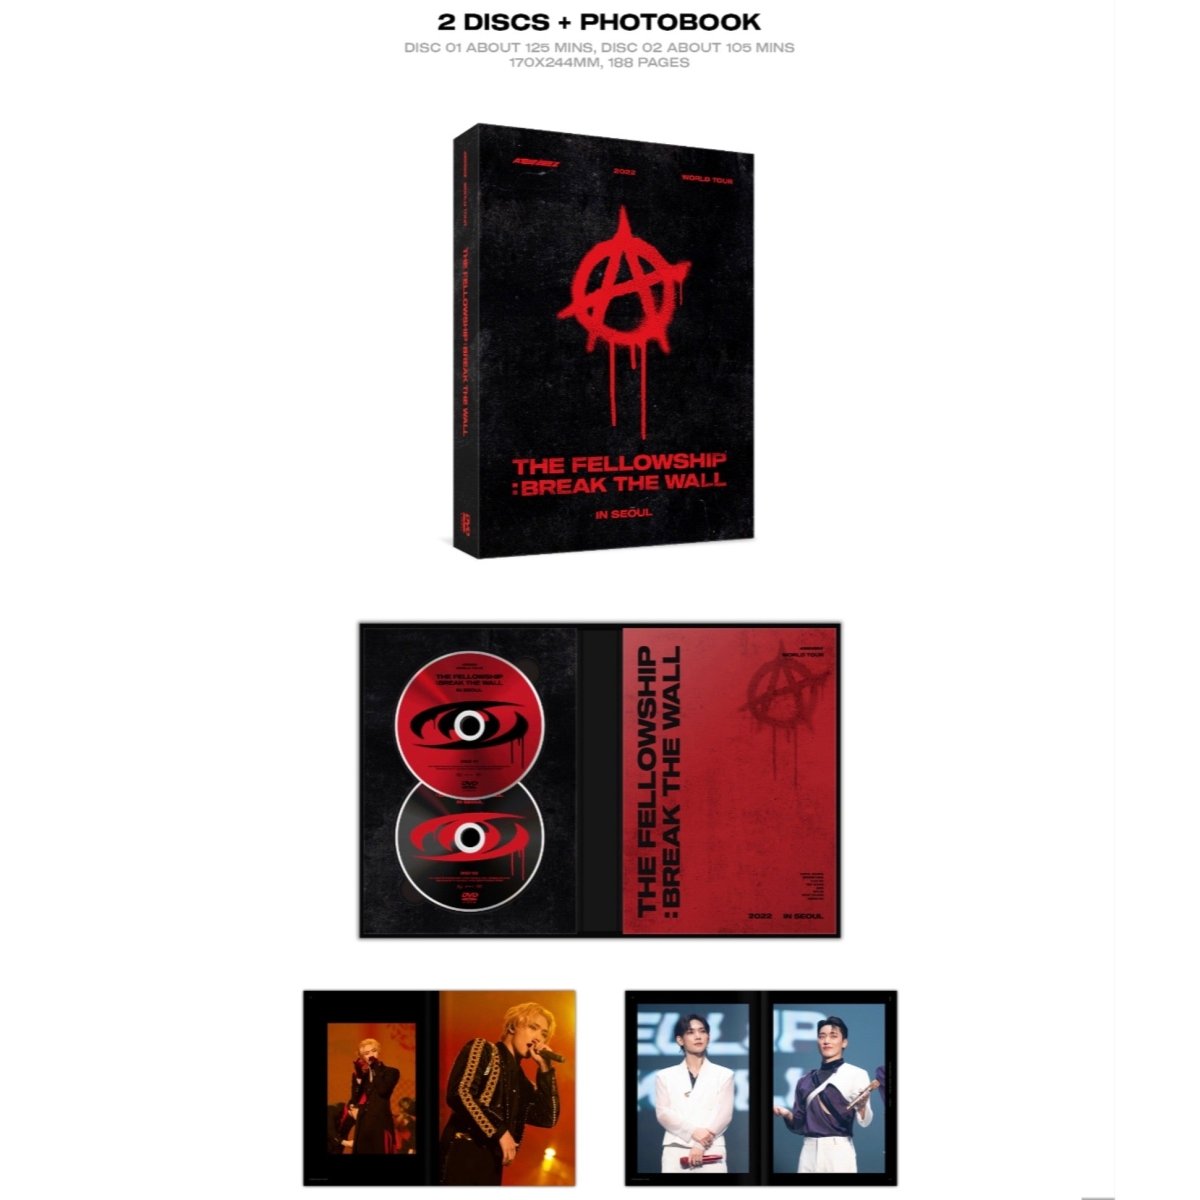 ATEEZ - World Tour THE FELLOWSHIP : BREAK THE WALL in Seoul DVD